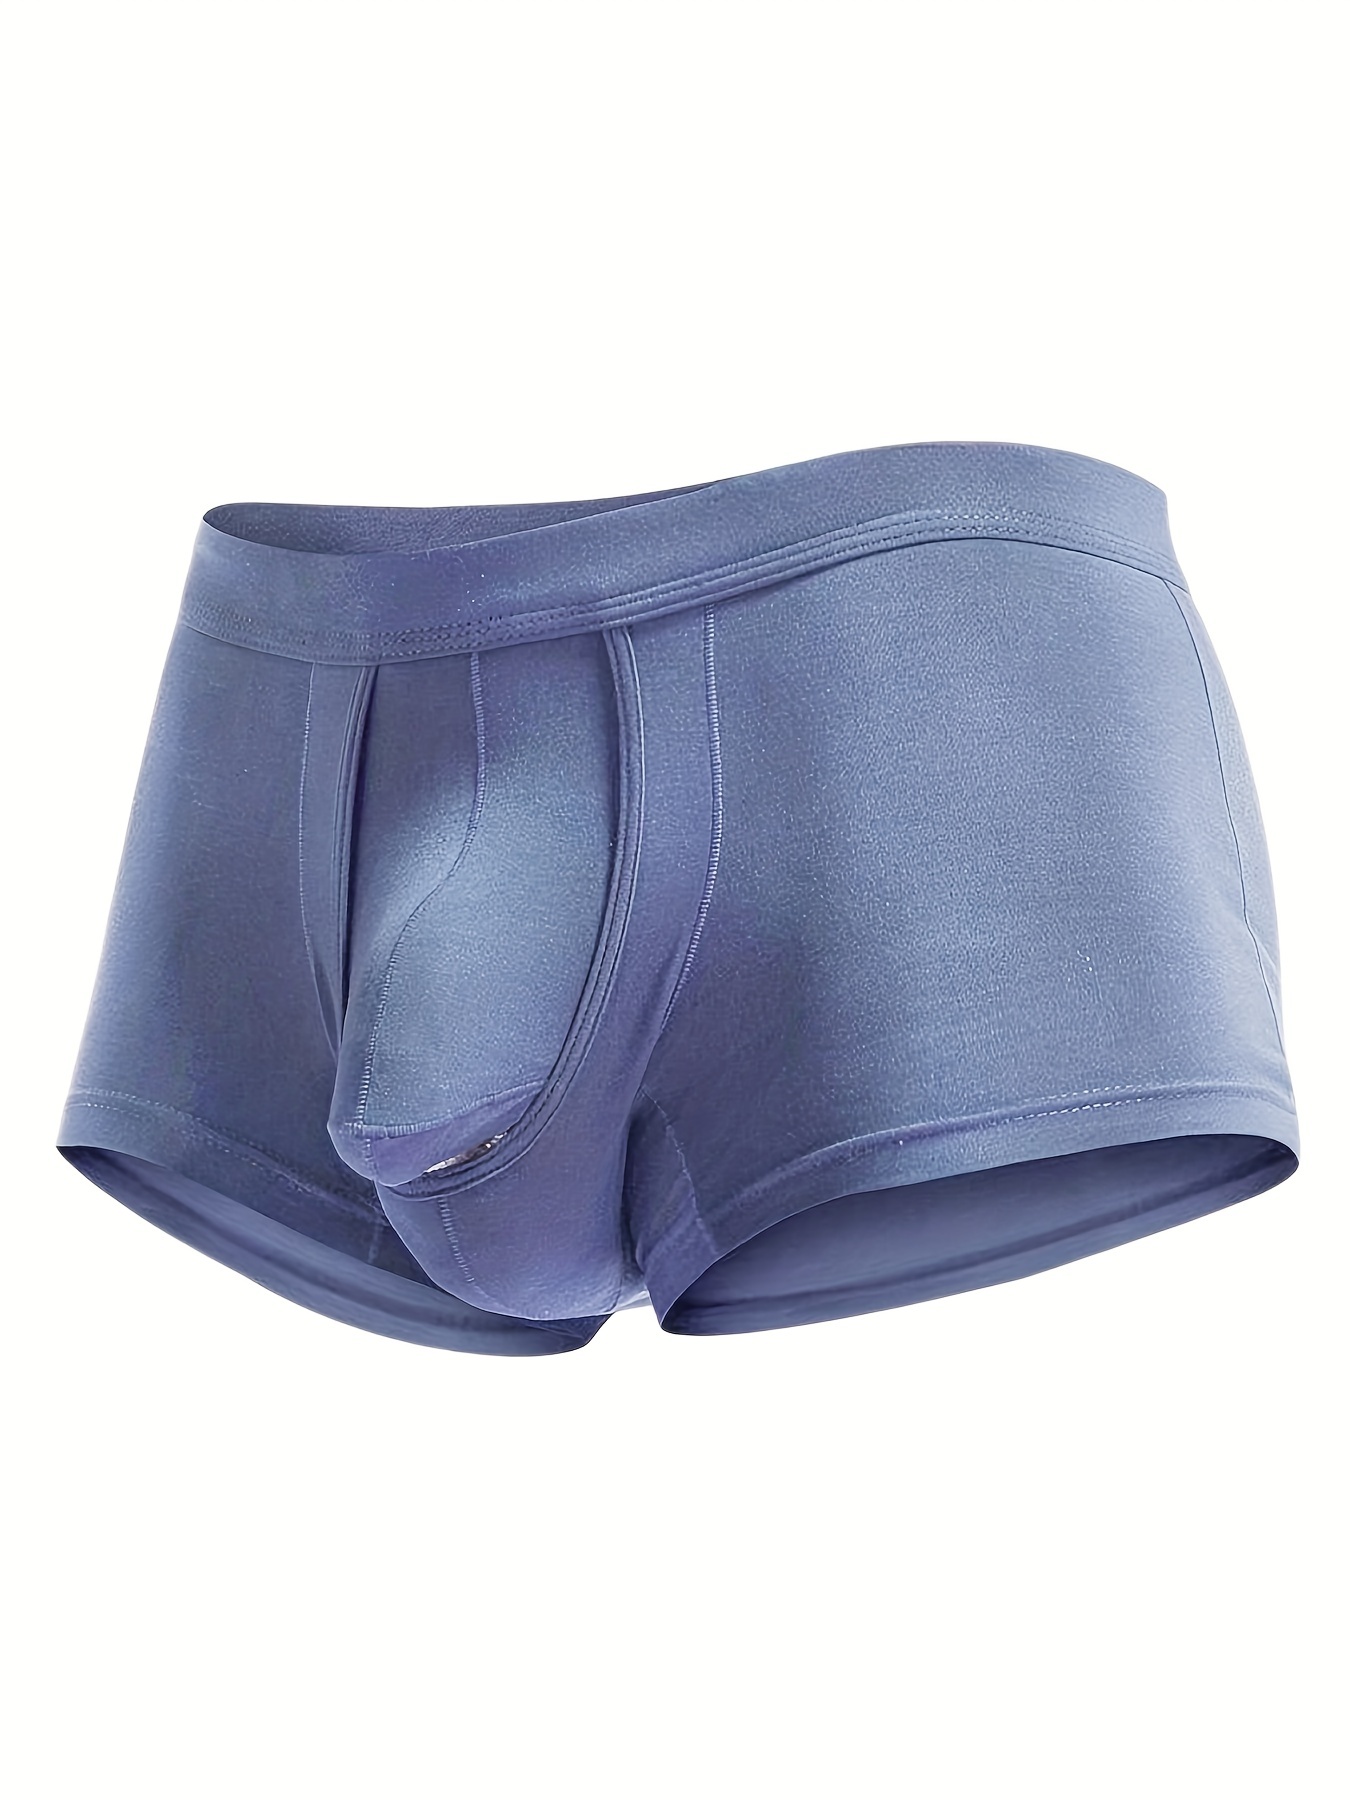 Mens Bulge Enhancing Underwear Sexy Big Bulge Pouch Low Rise Pouch Briefs  Pants | eBay